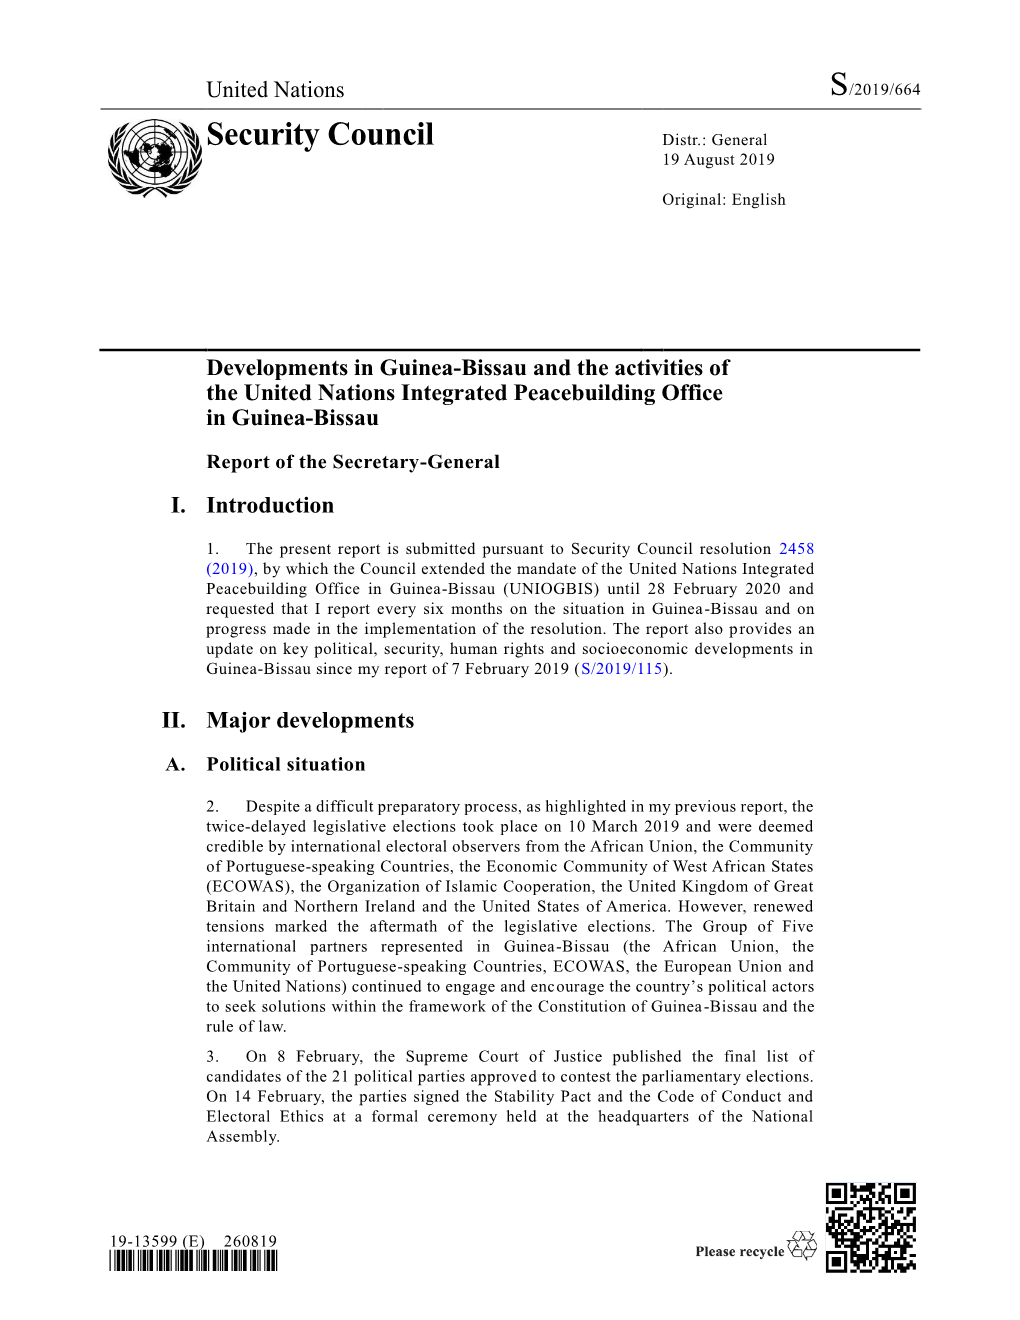 Security Council Distr.: General 19 August 2019